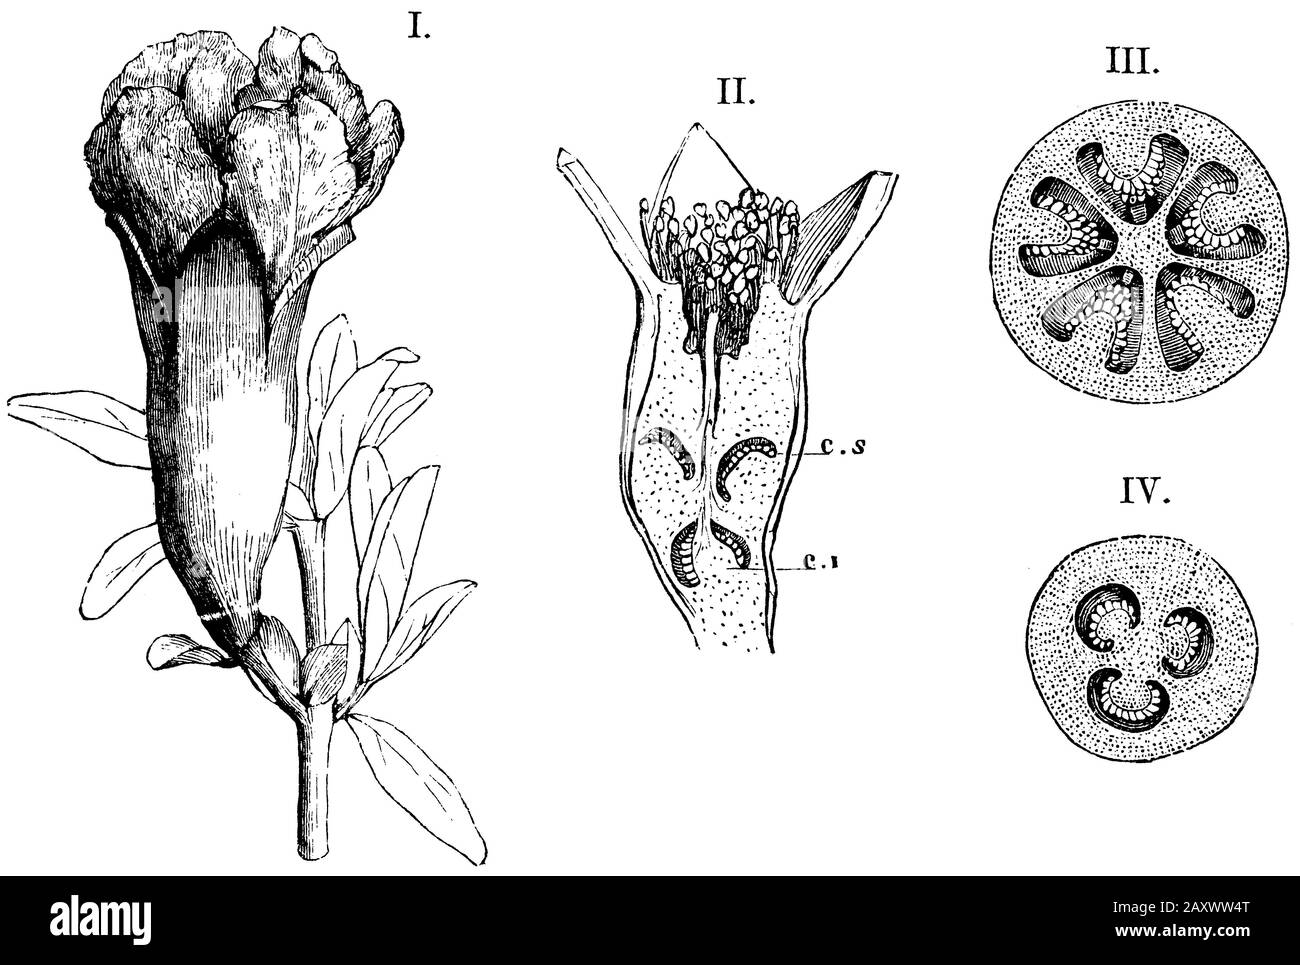 Pomegranate, Punica granatum, anonym (botany book, 1875) Stock Photo